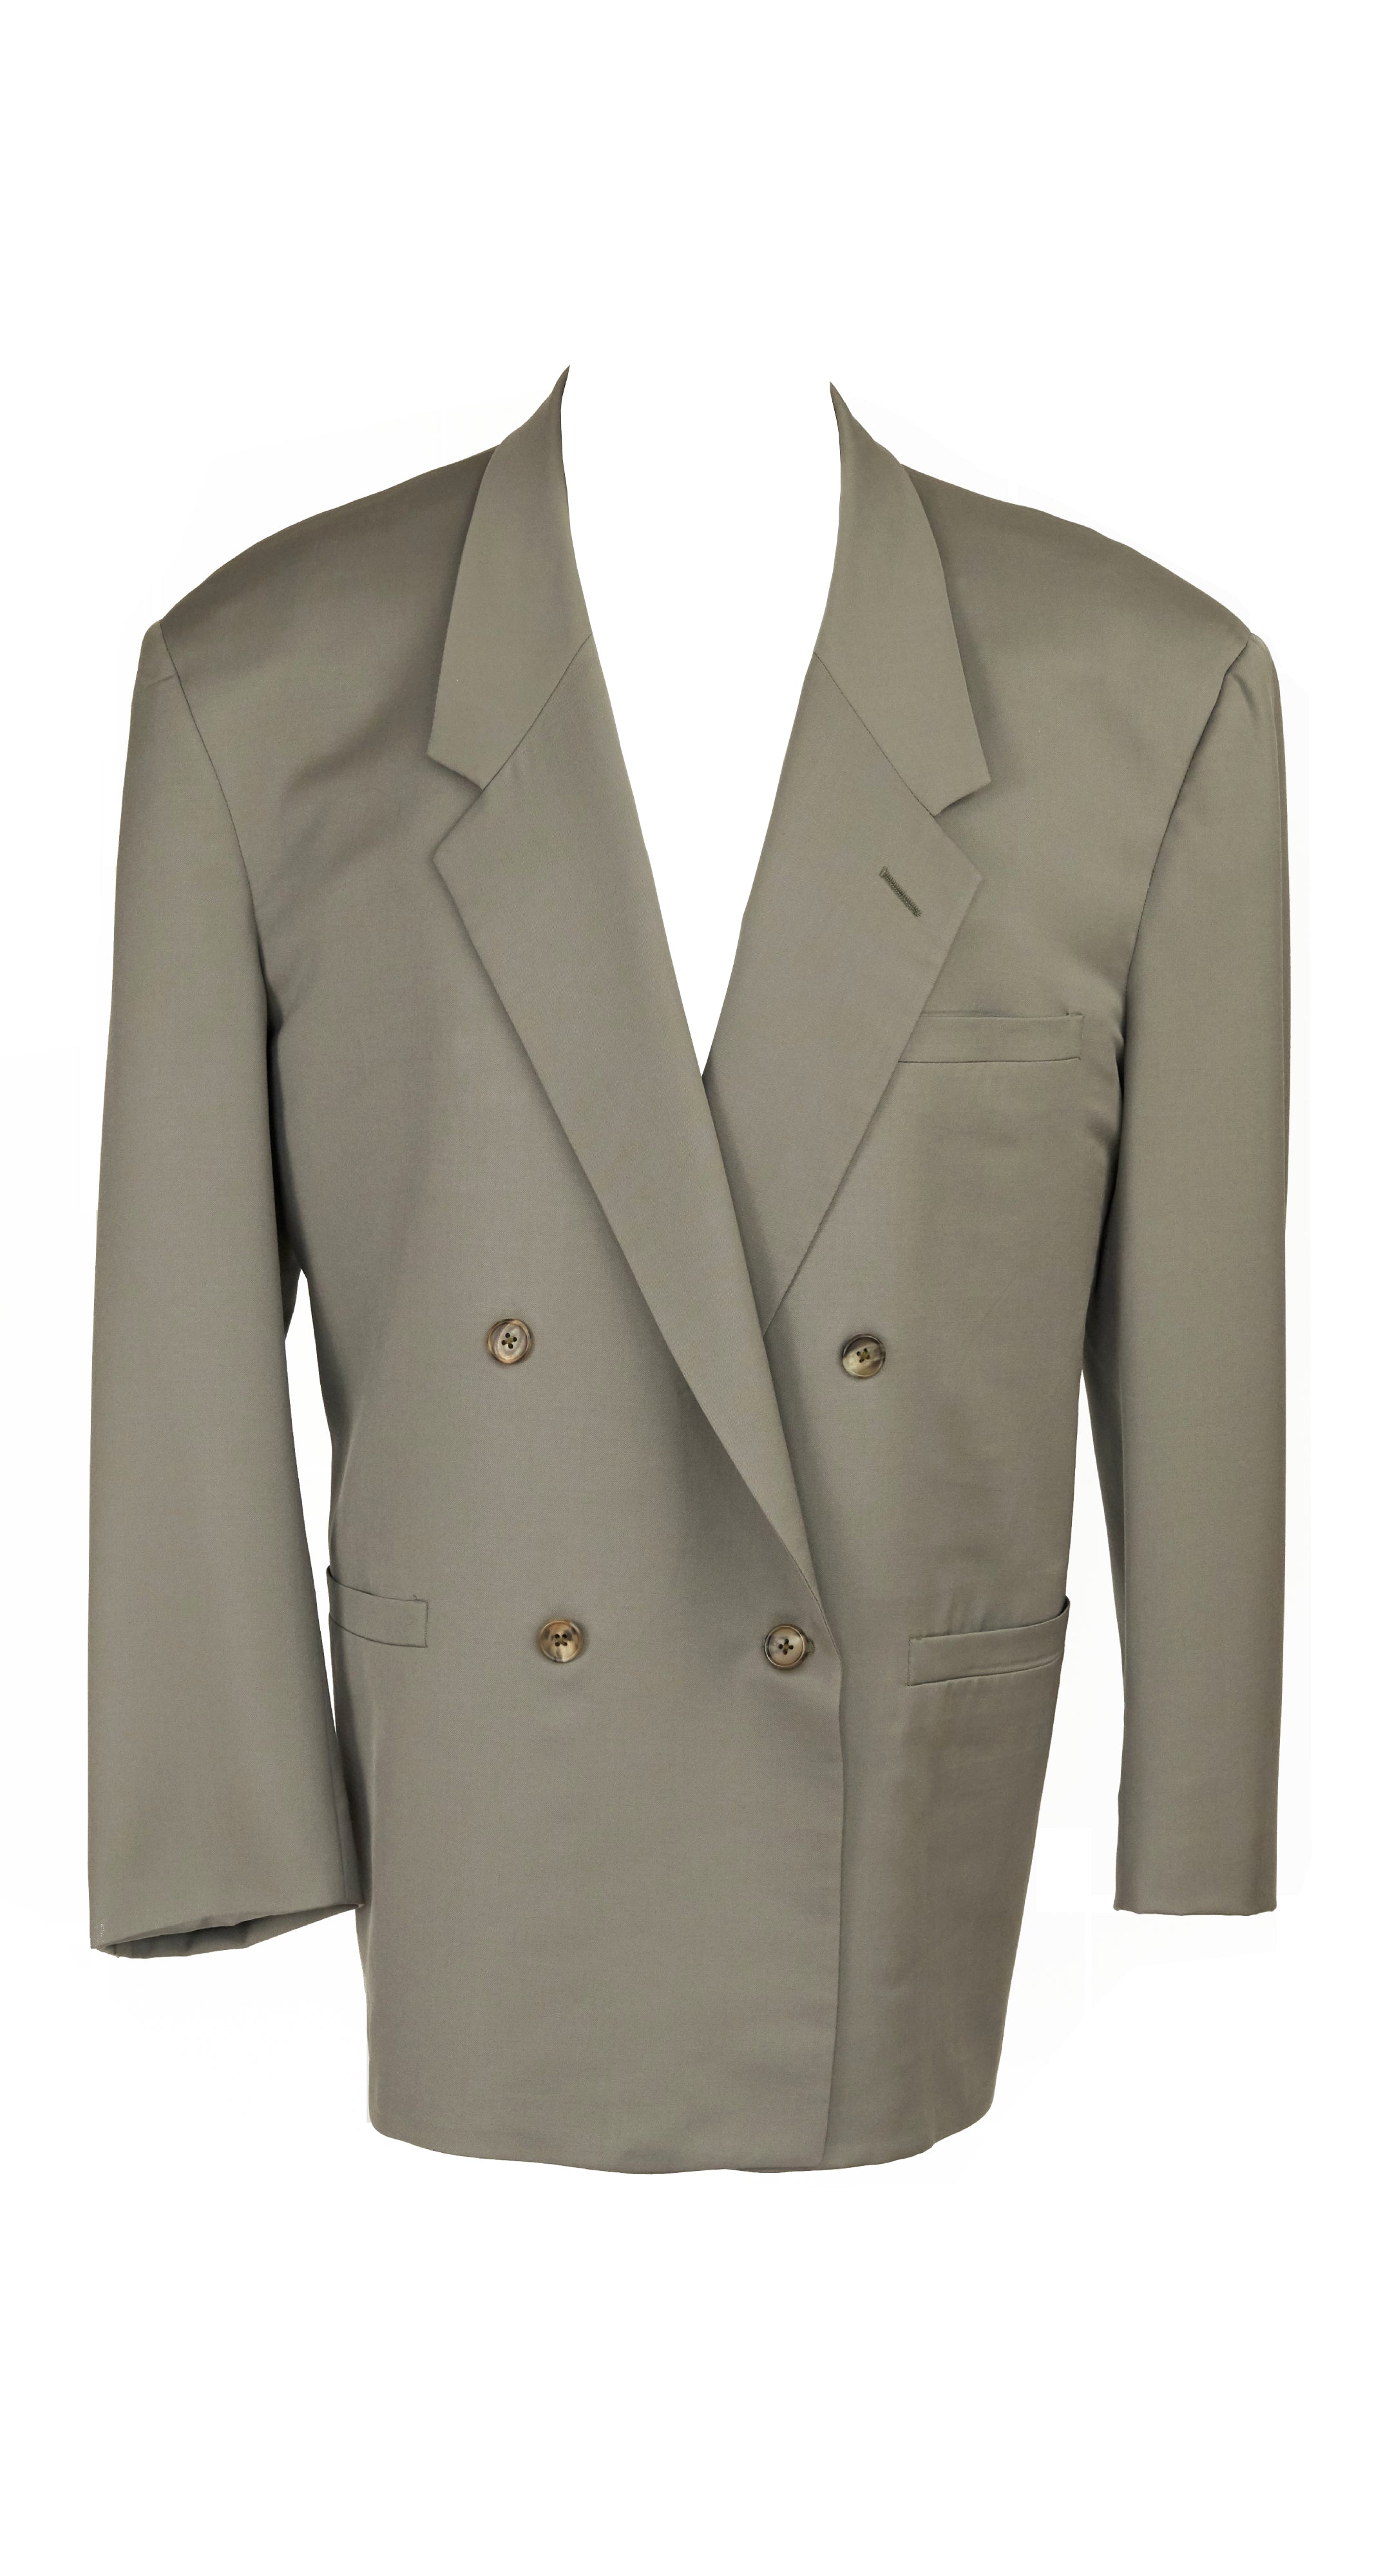 versace men's suit jackets